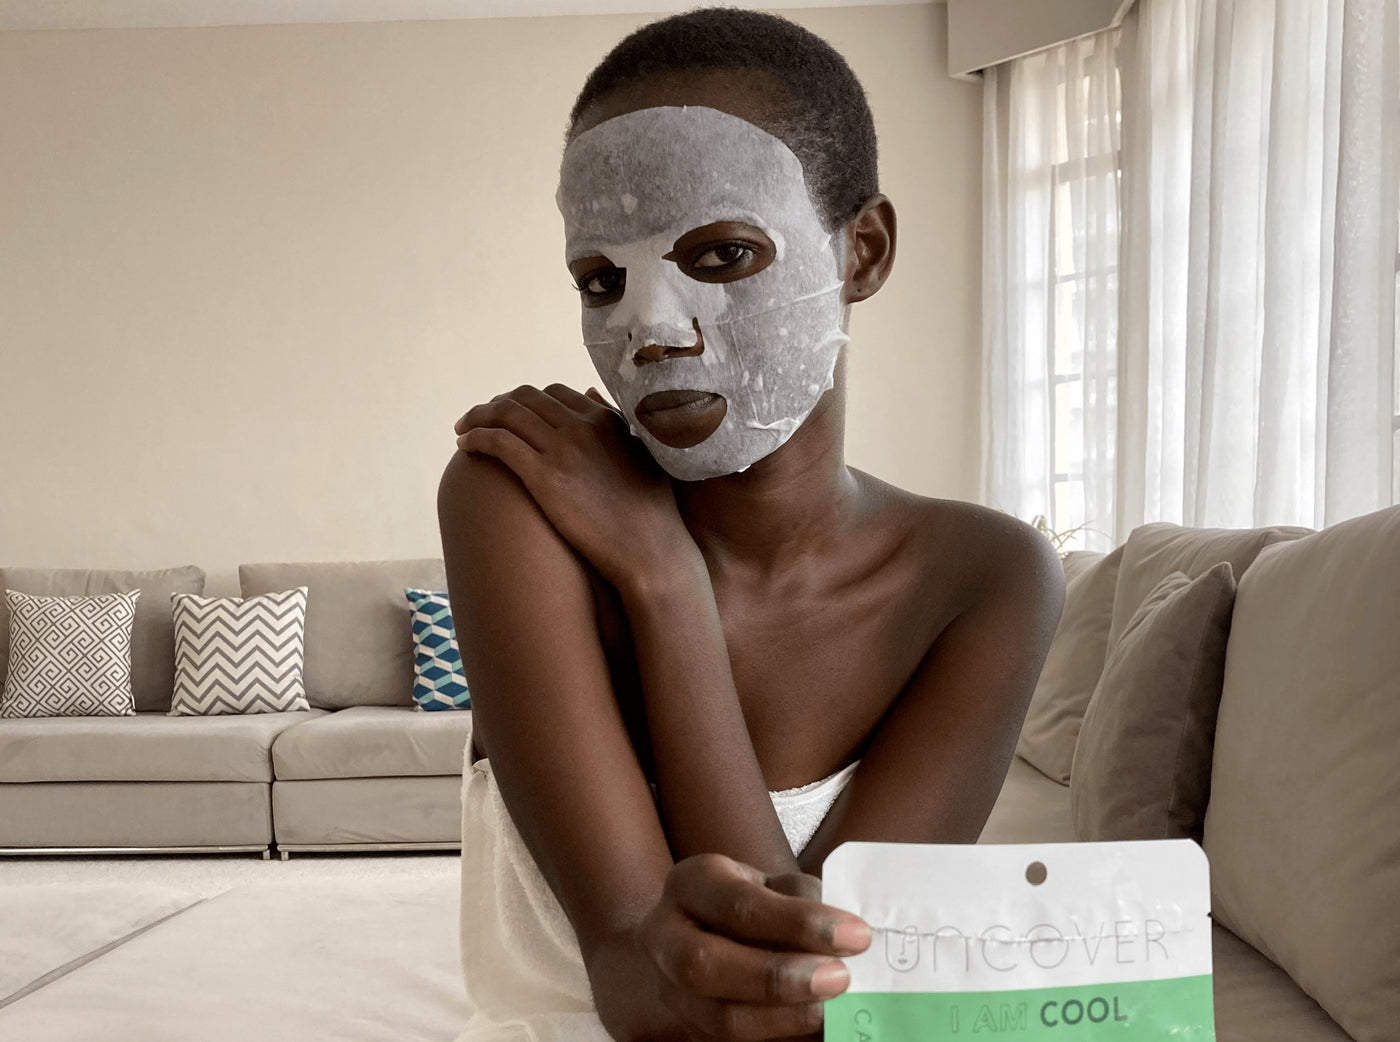 Uncover Sheet Face Mask - Cool - Shopzetu